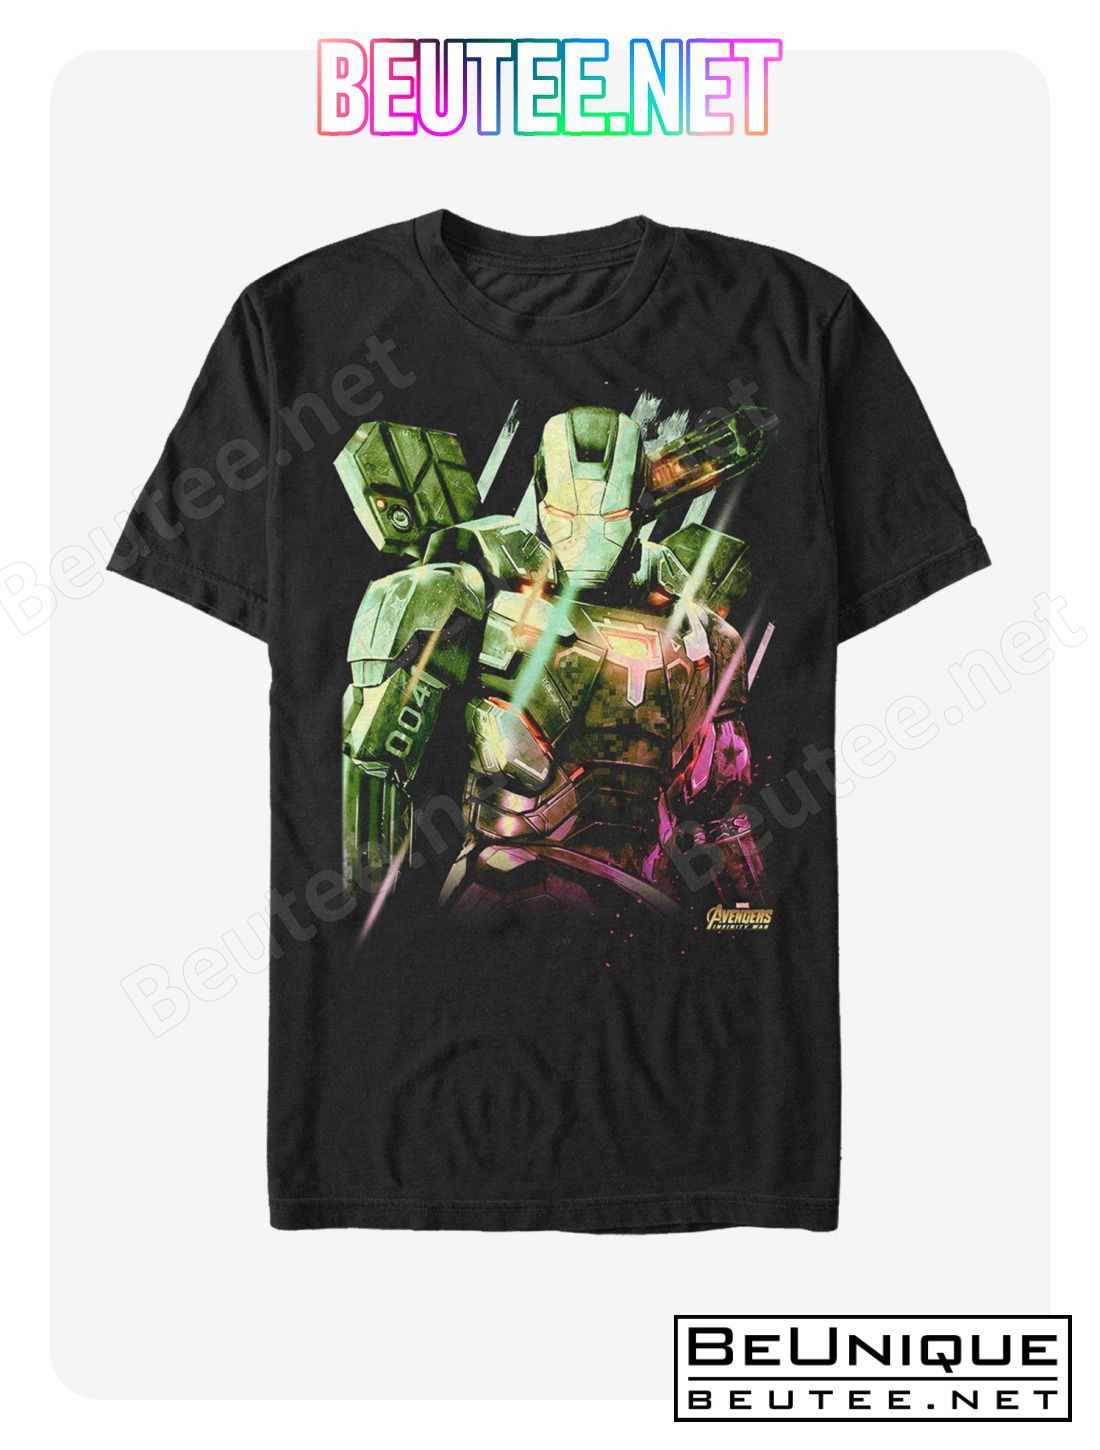 Marvel Avengers: Infinity War Machine T-Shirt